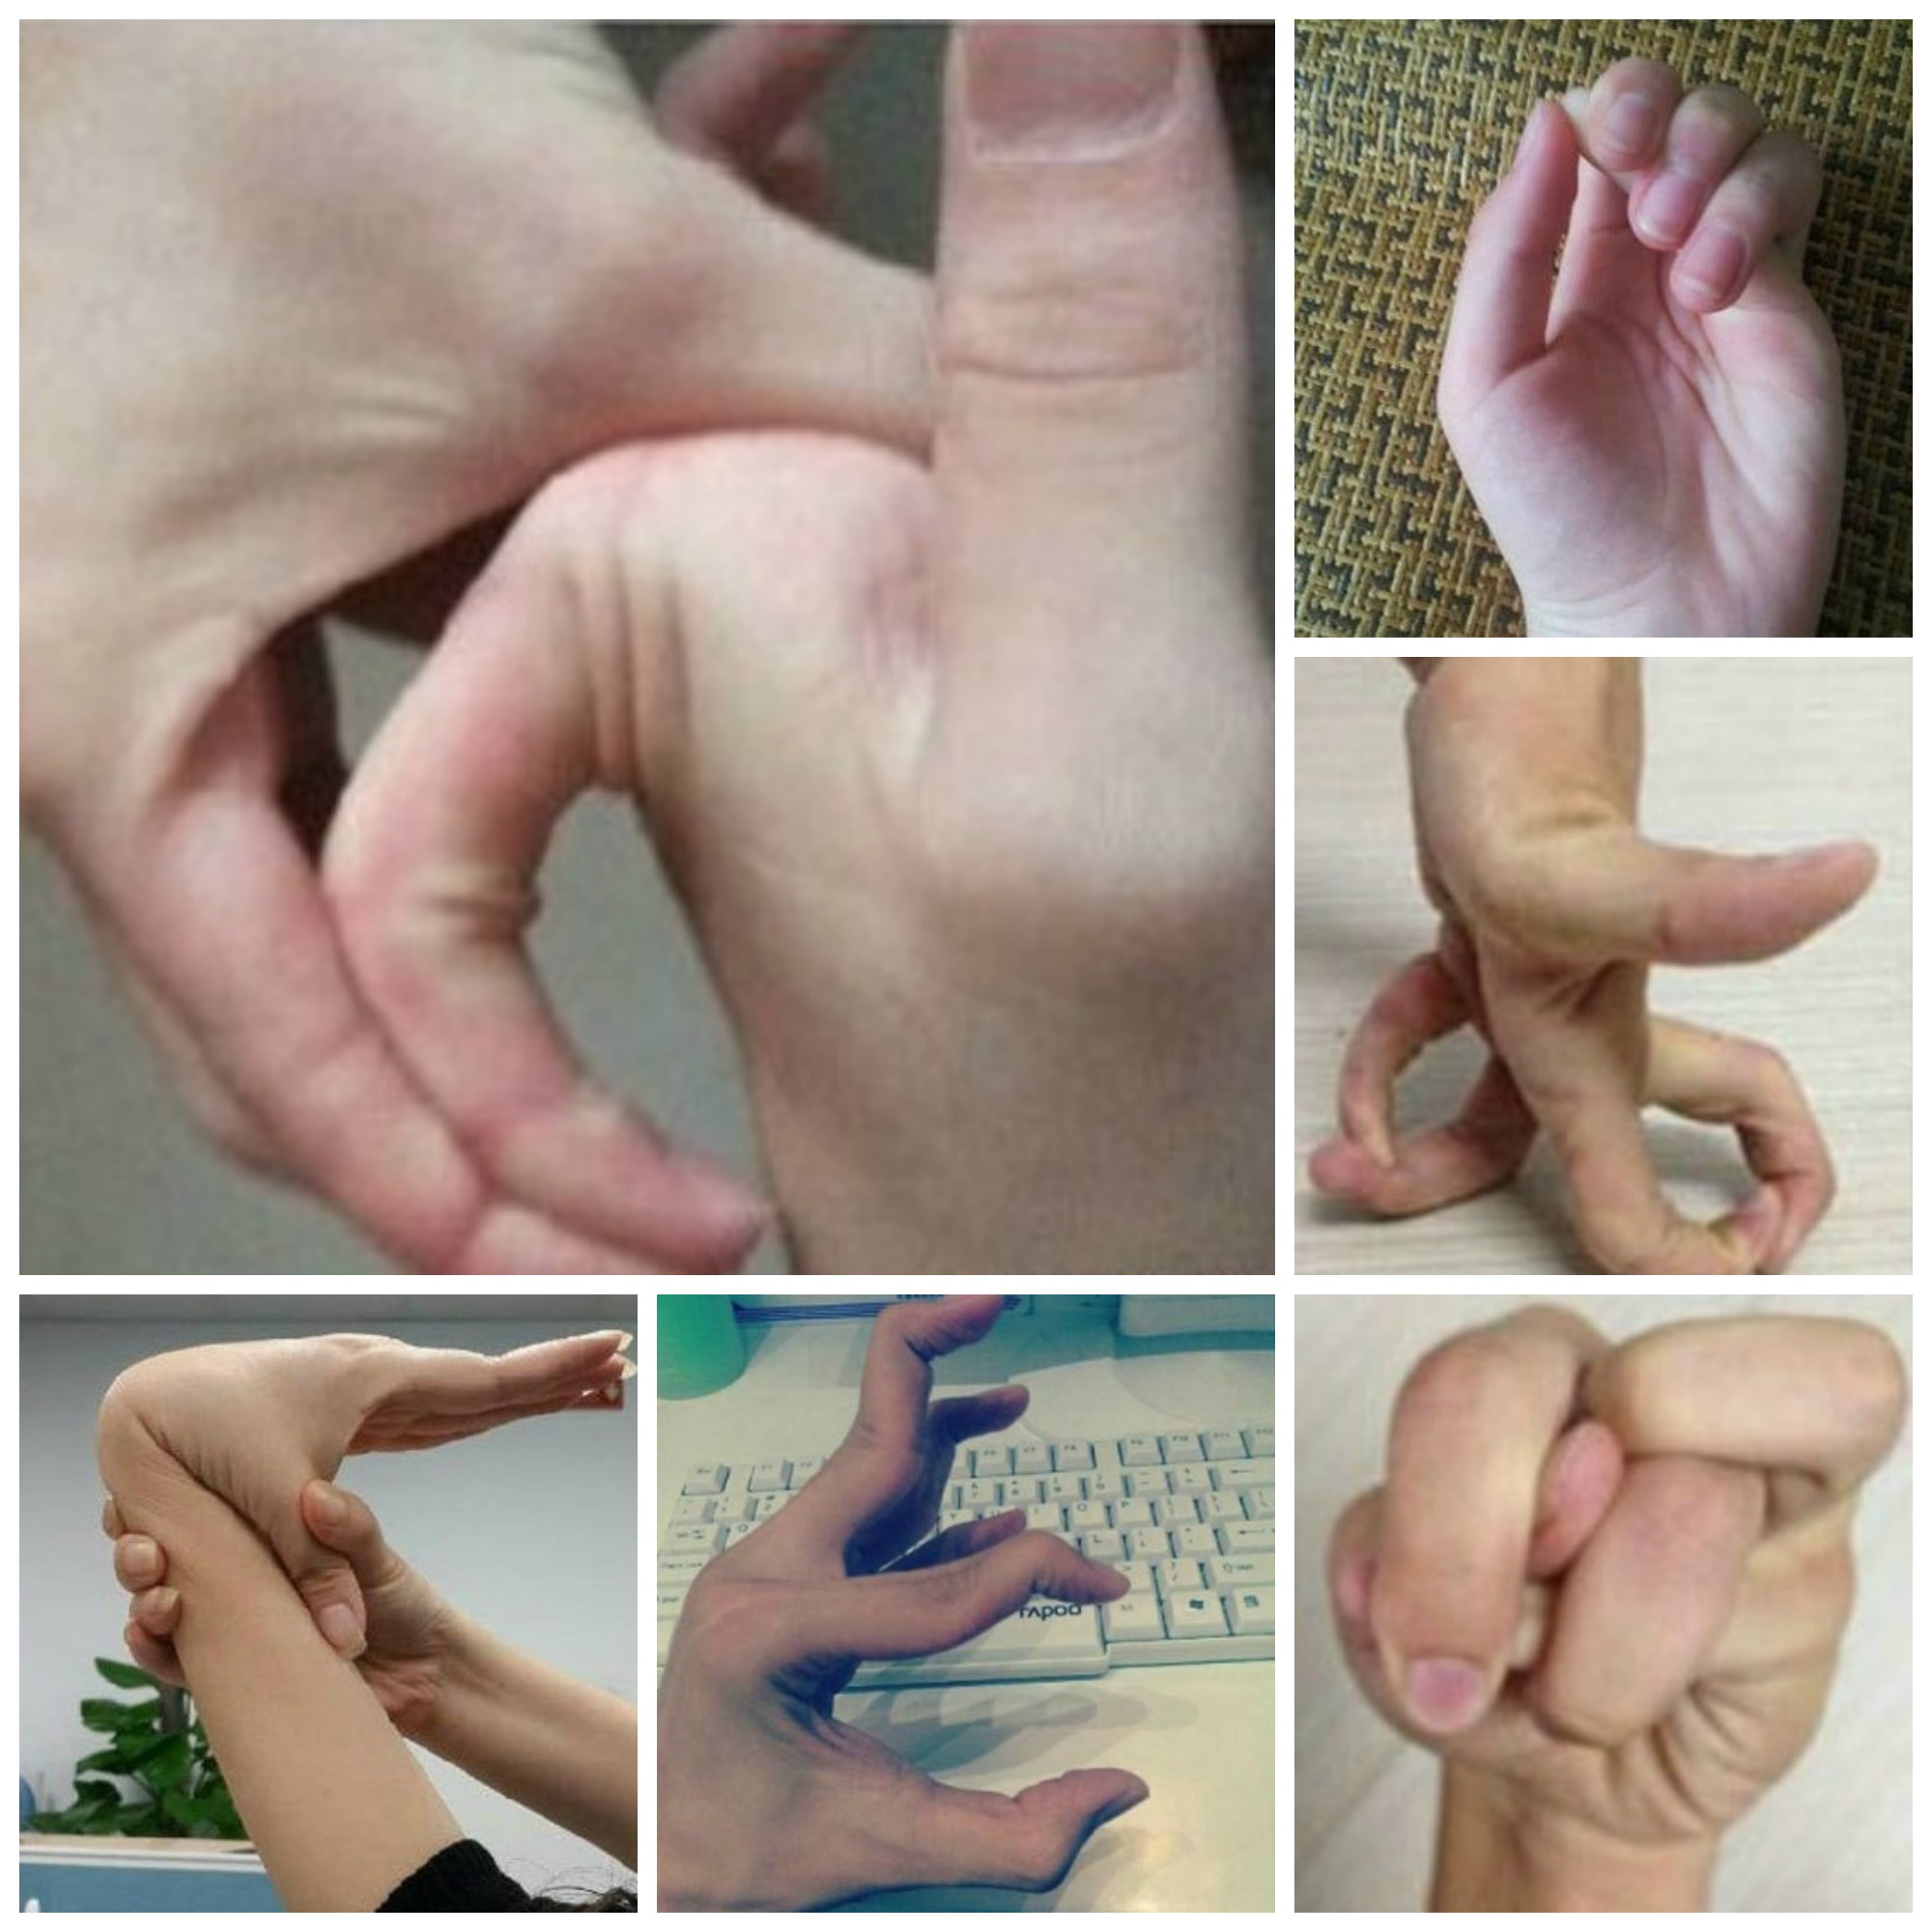 ashley flansburg share one finger challenge photos